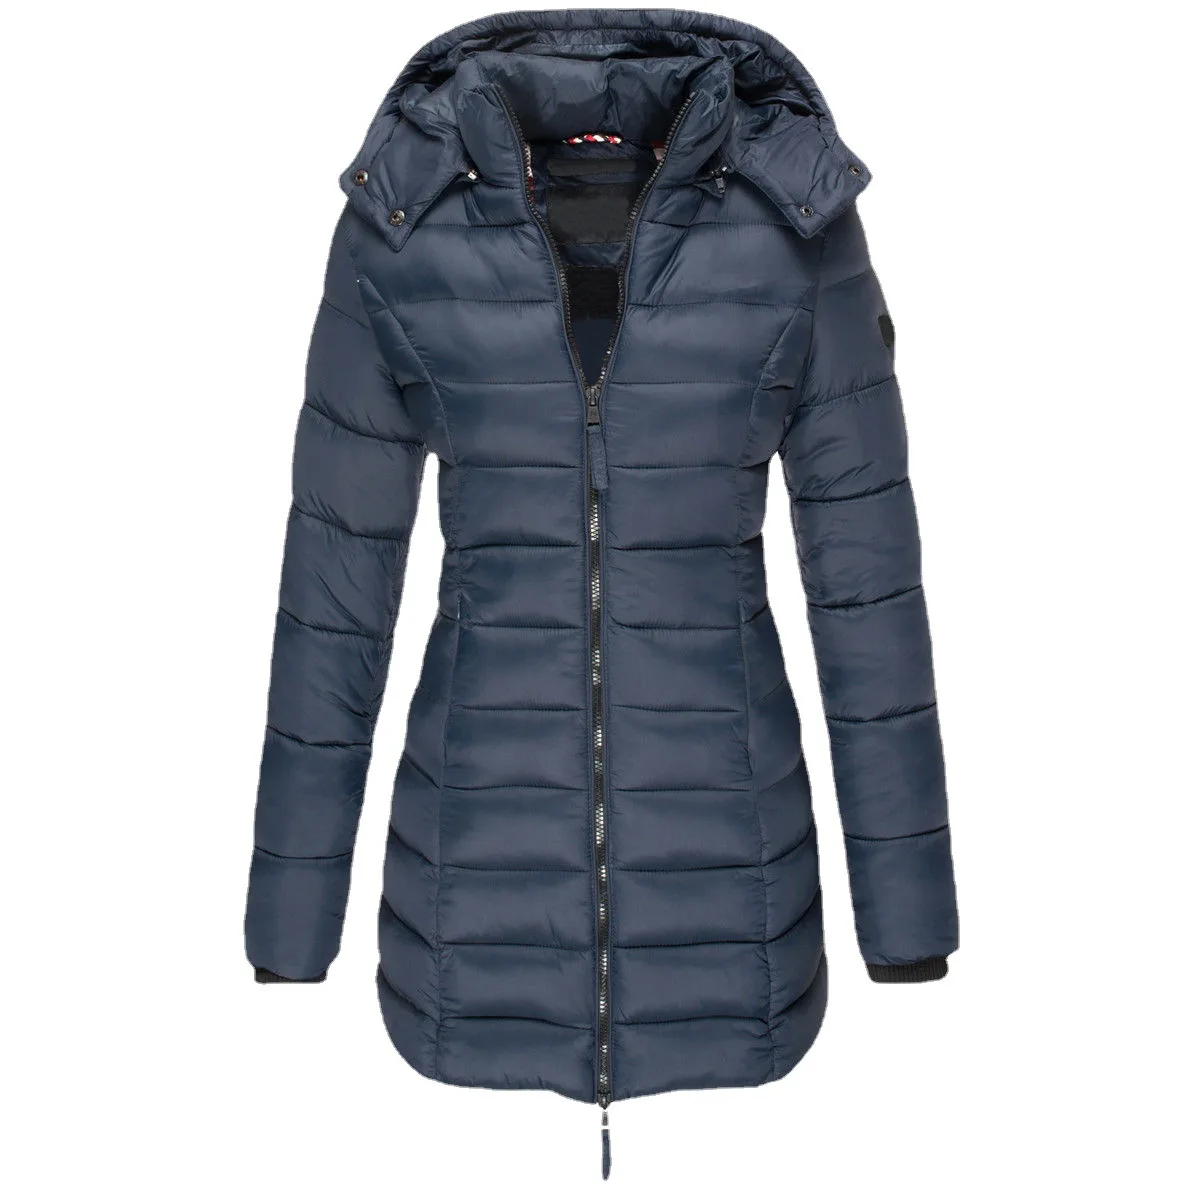 Winter Women's Cotton Jacket Medium Length Slim Fitting Cotton Jacket Warm Solid Hooded Cotton Jacket enlarge